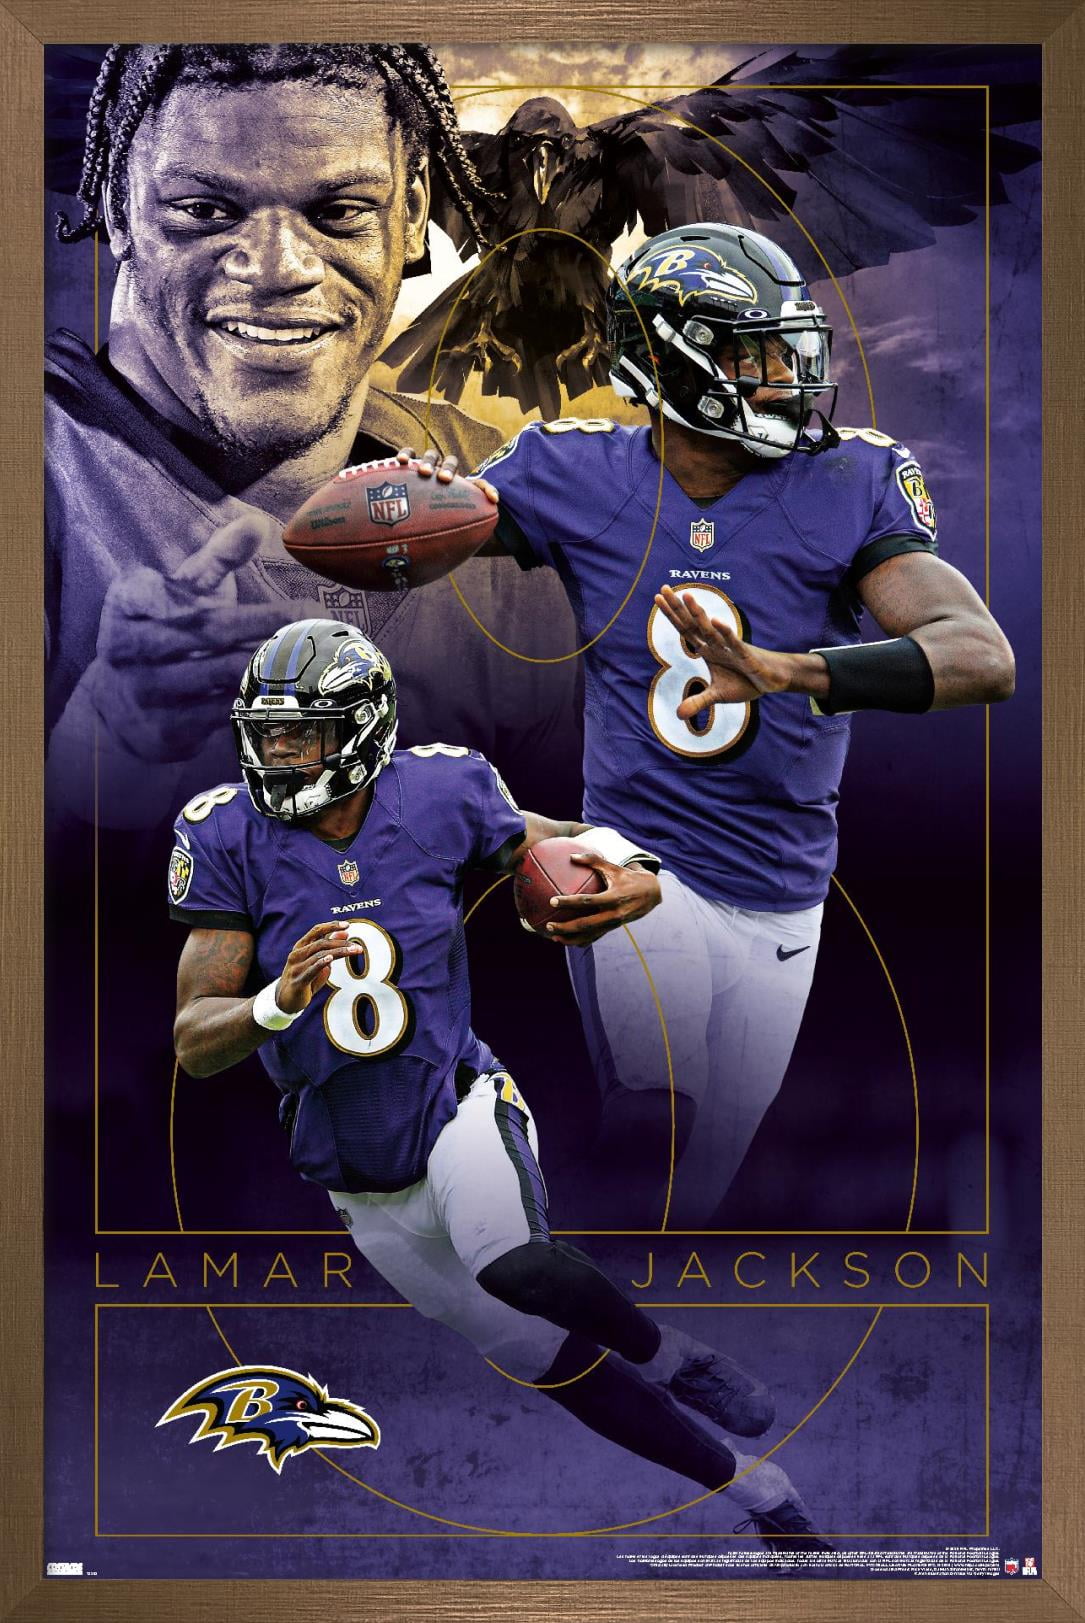 NFL Baltimore Ravens - Lamar Jackson 20 Wall Poster, 22.375 x 34